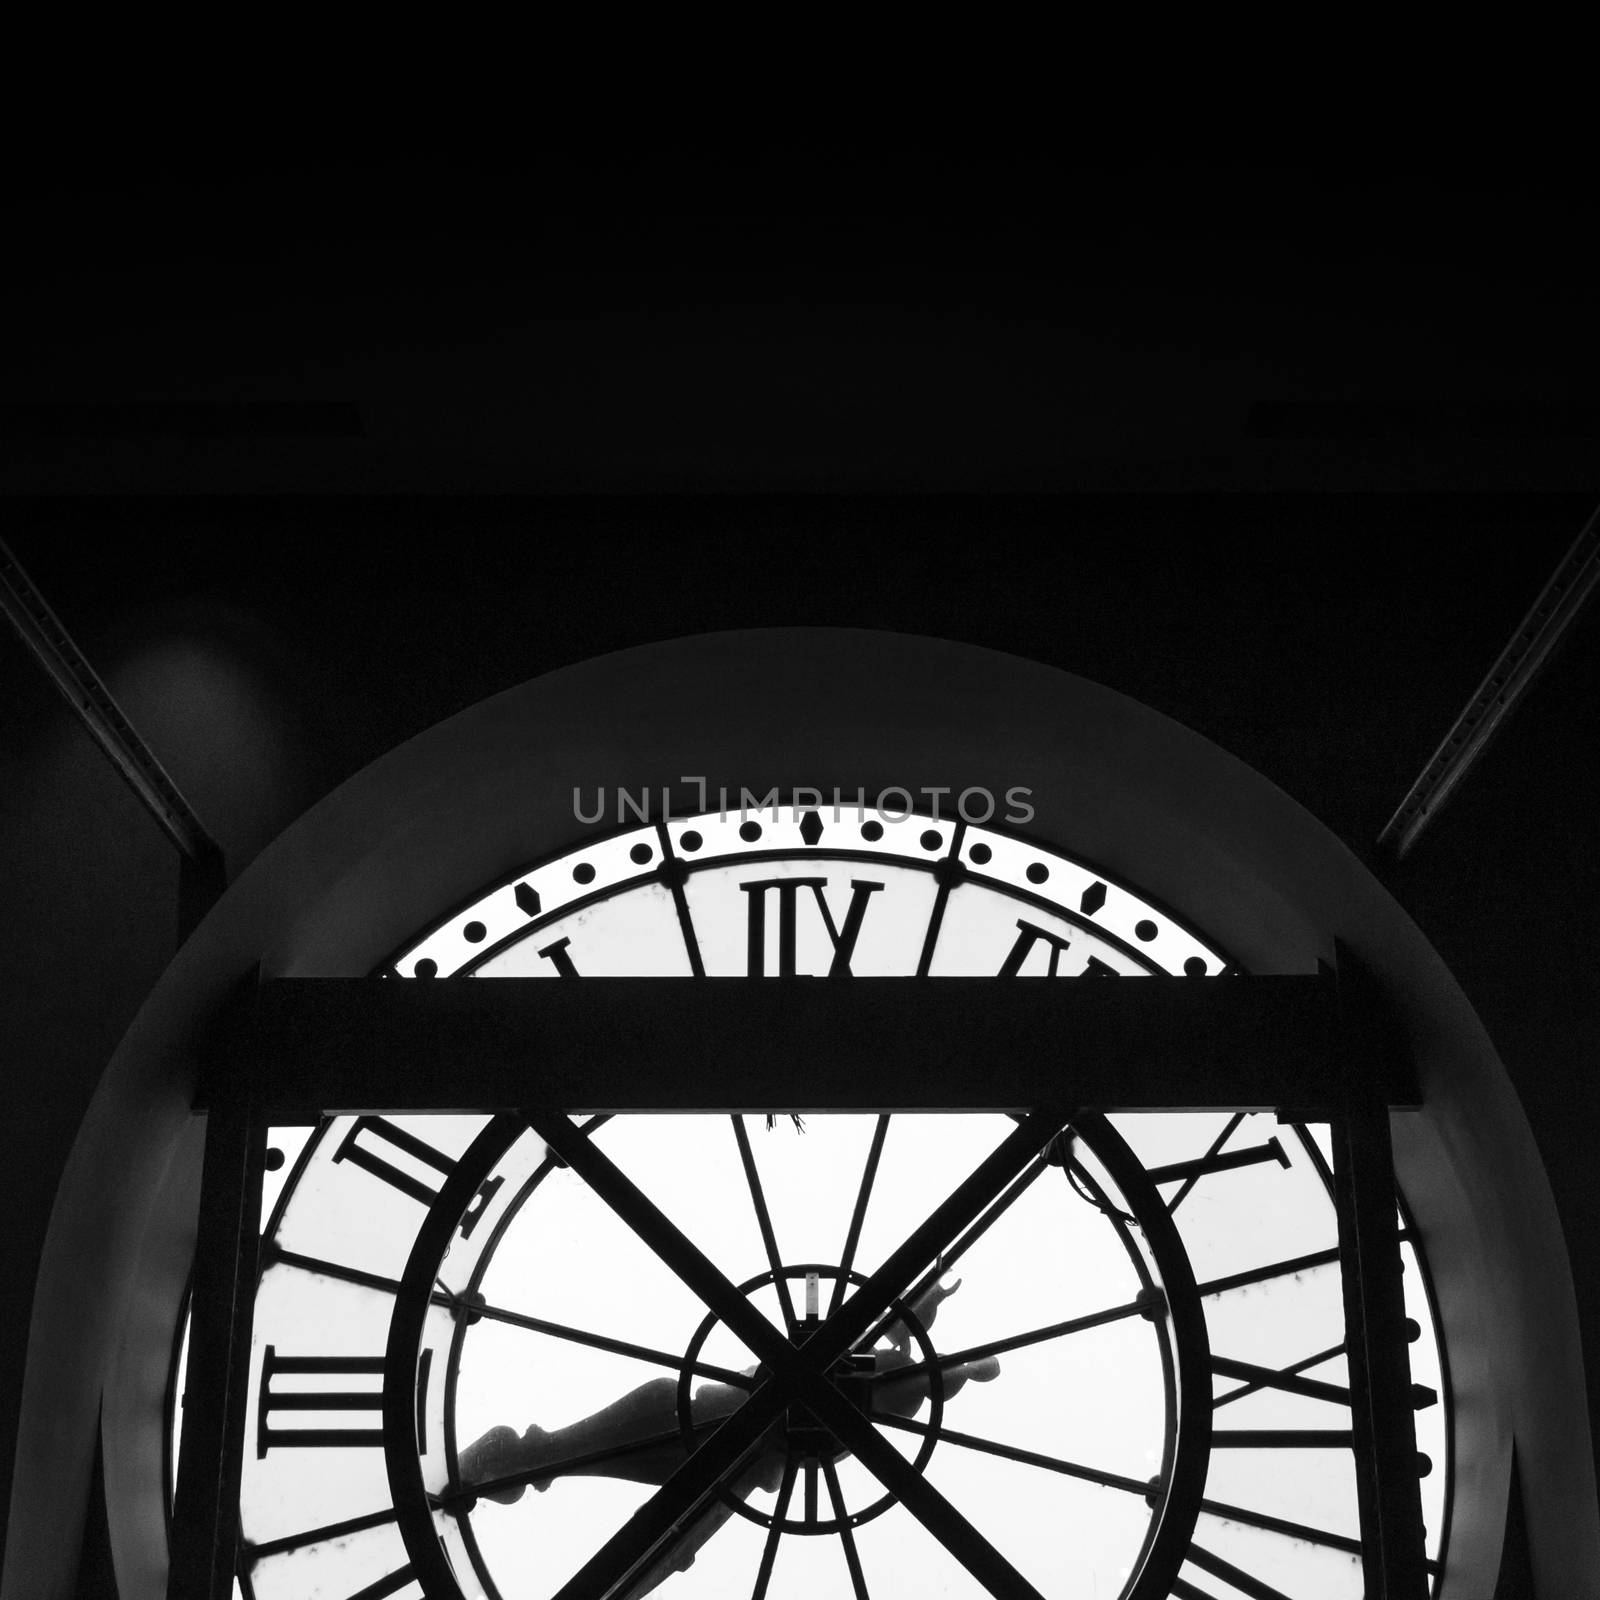 Orsay Museum (Musee d'Orsay) clock in Paris, France